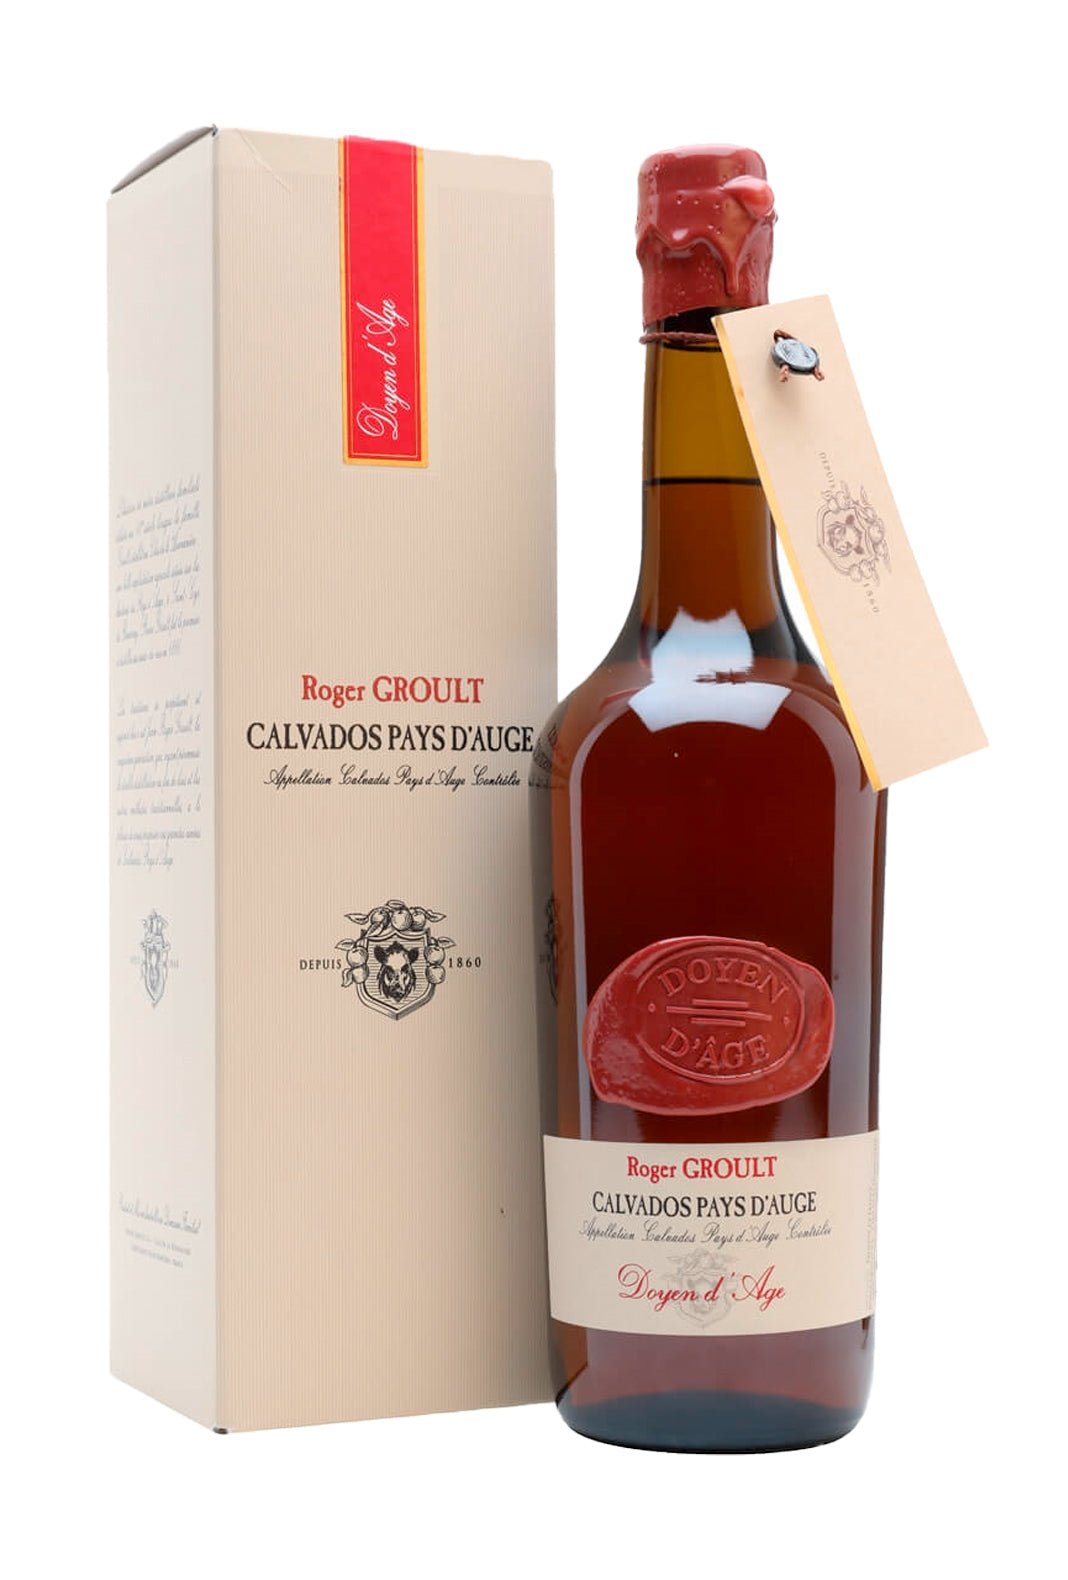 Roger Groult Calvados Pays D'Auge Doyen D'Age 41% 700ml | Brandy | Shop online at Spirits of France